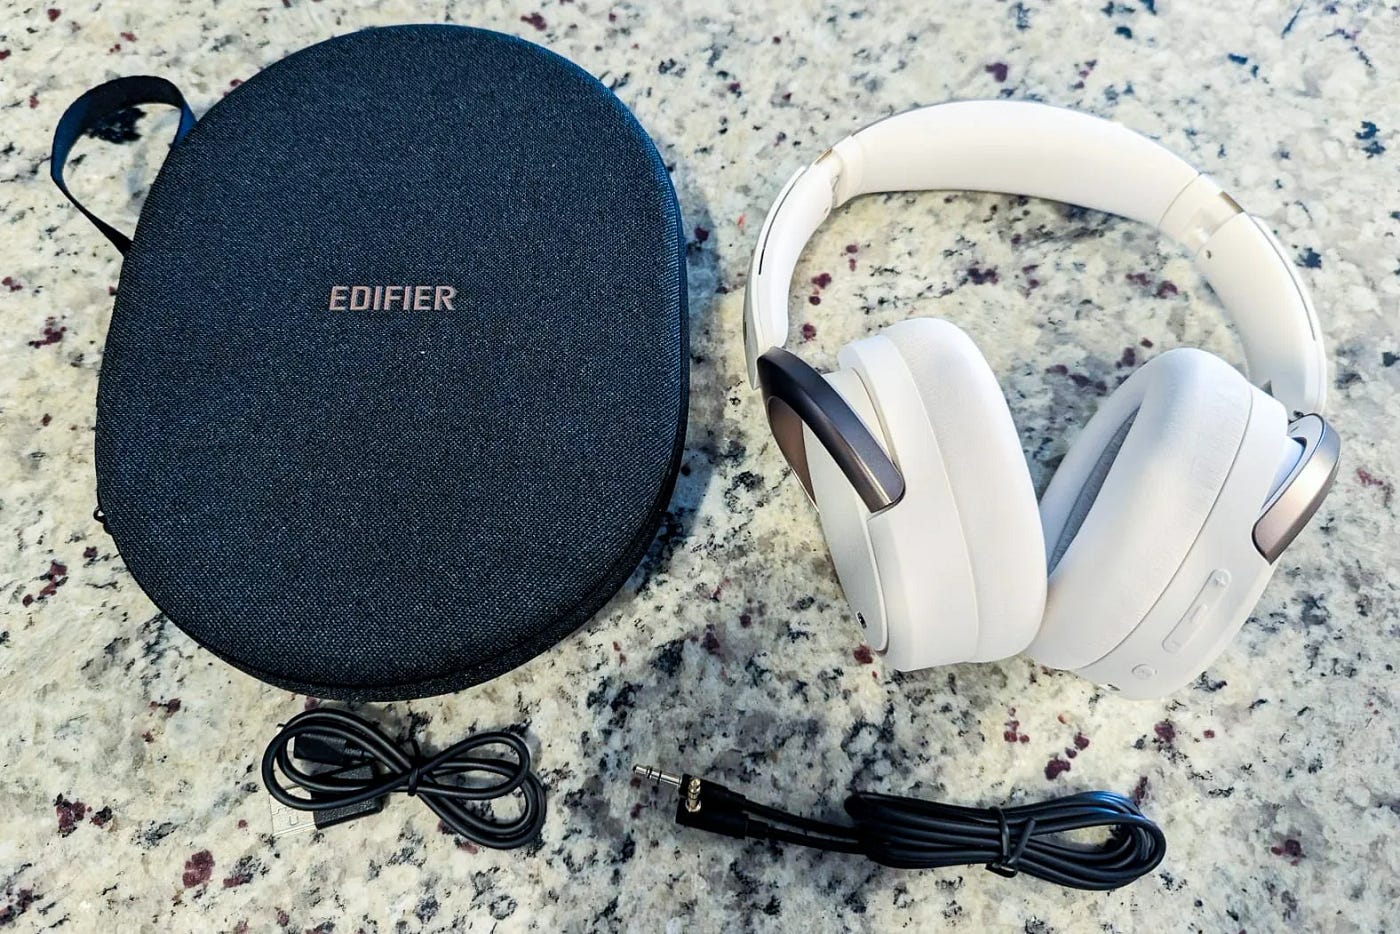 Edifier WH950NB Wireless Headphones Black